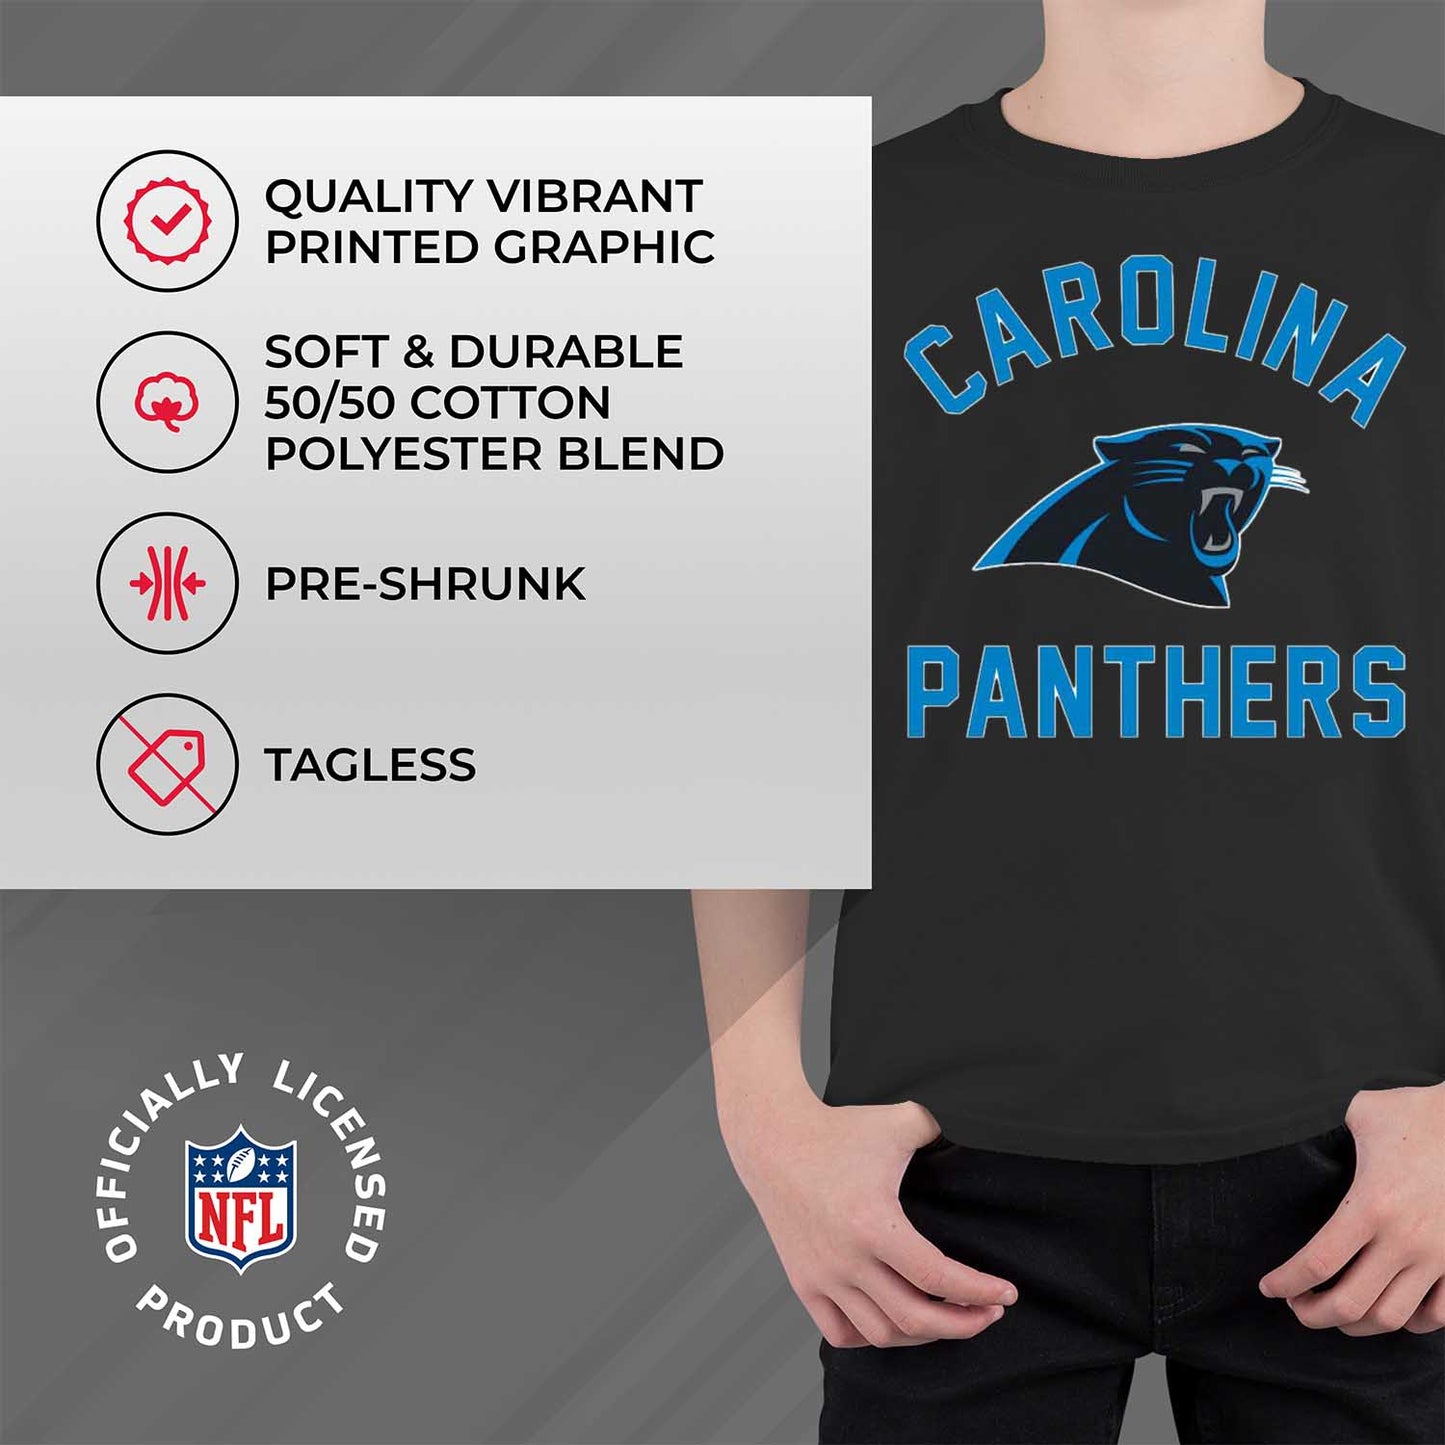 Carolina Panthers NFL Youth Gameday Football T-Shirt - Black